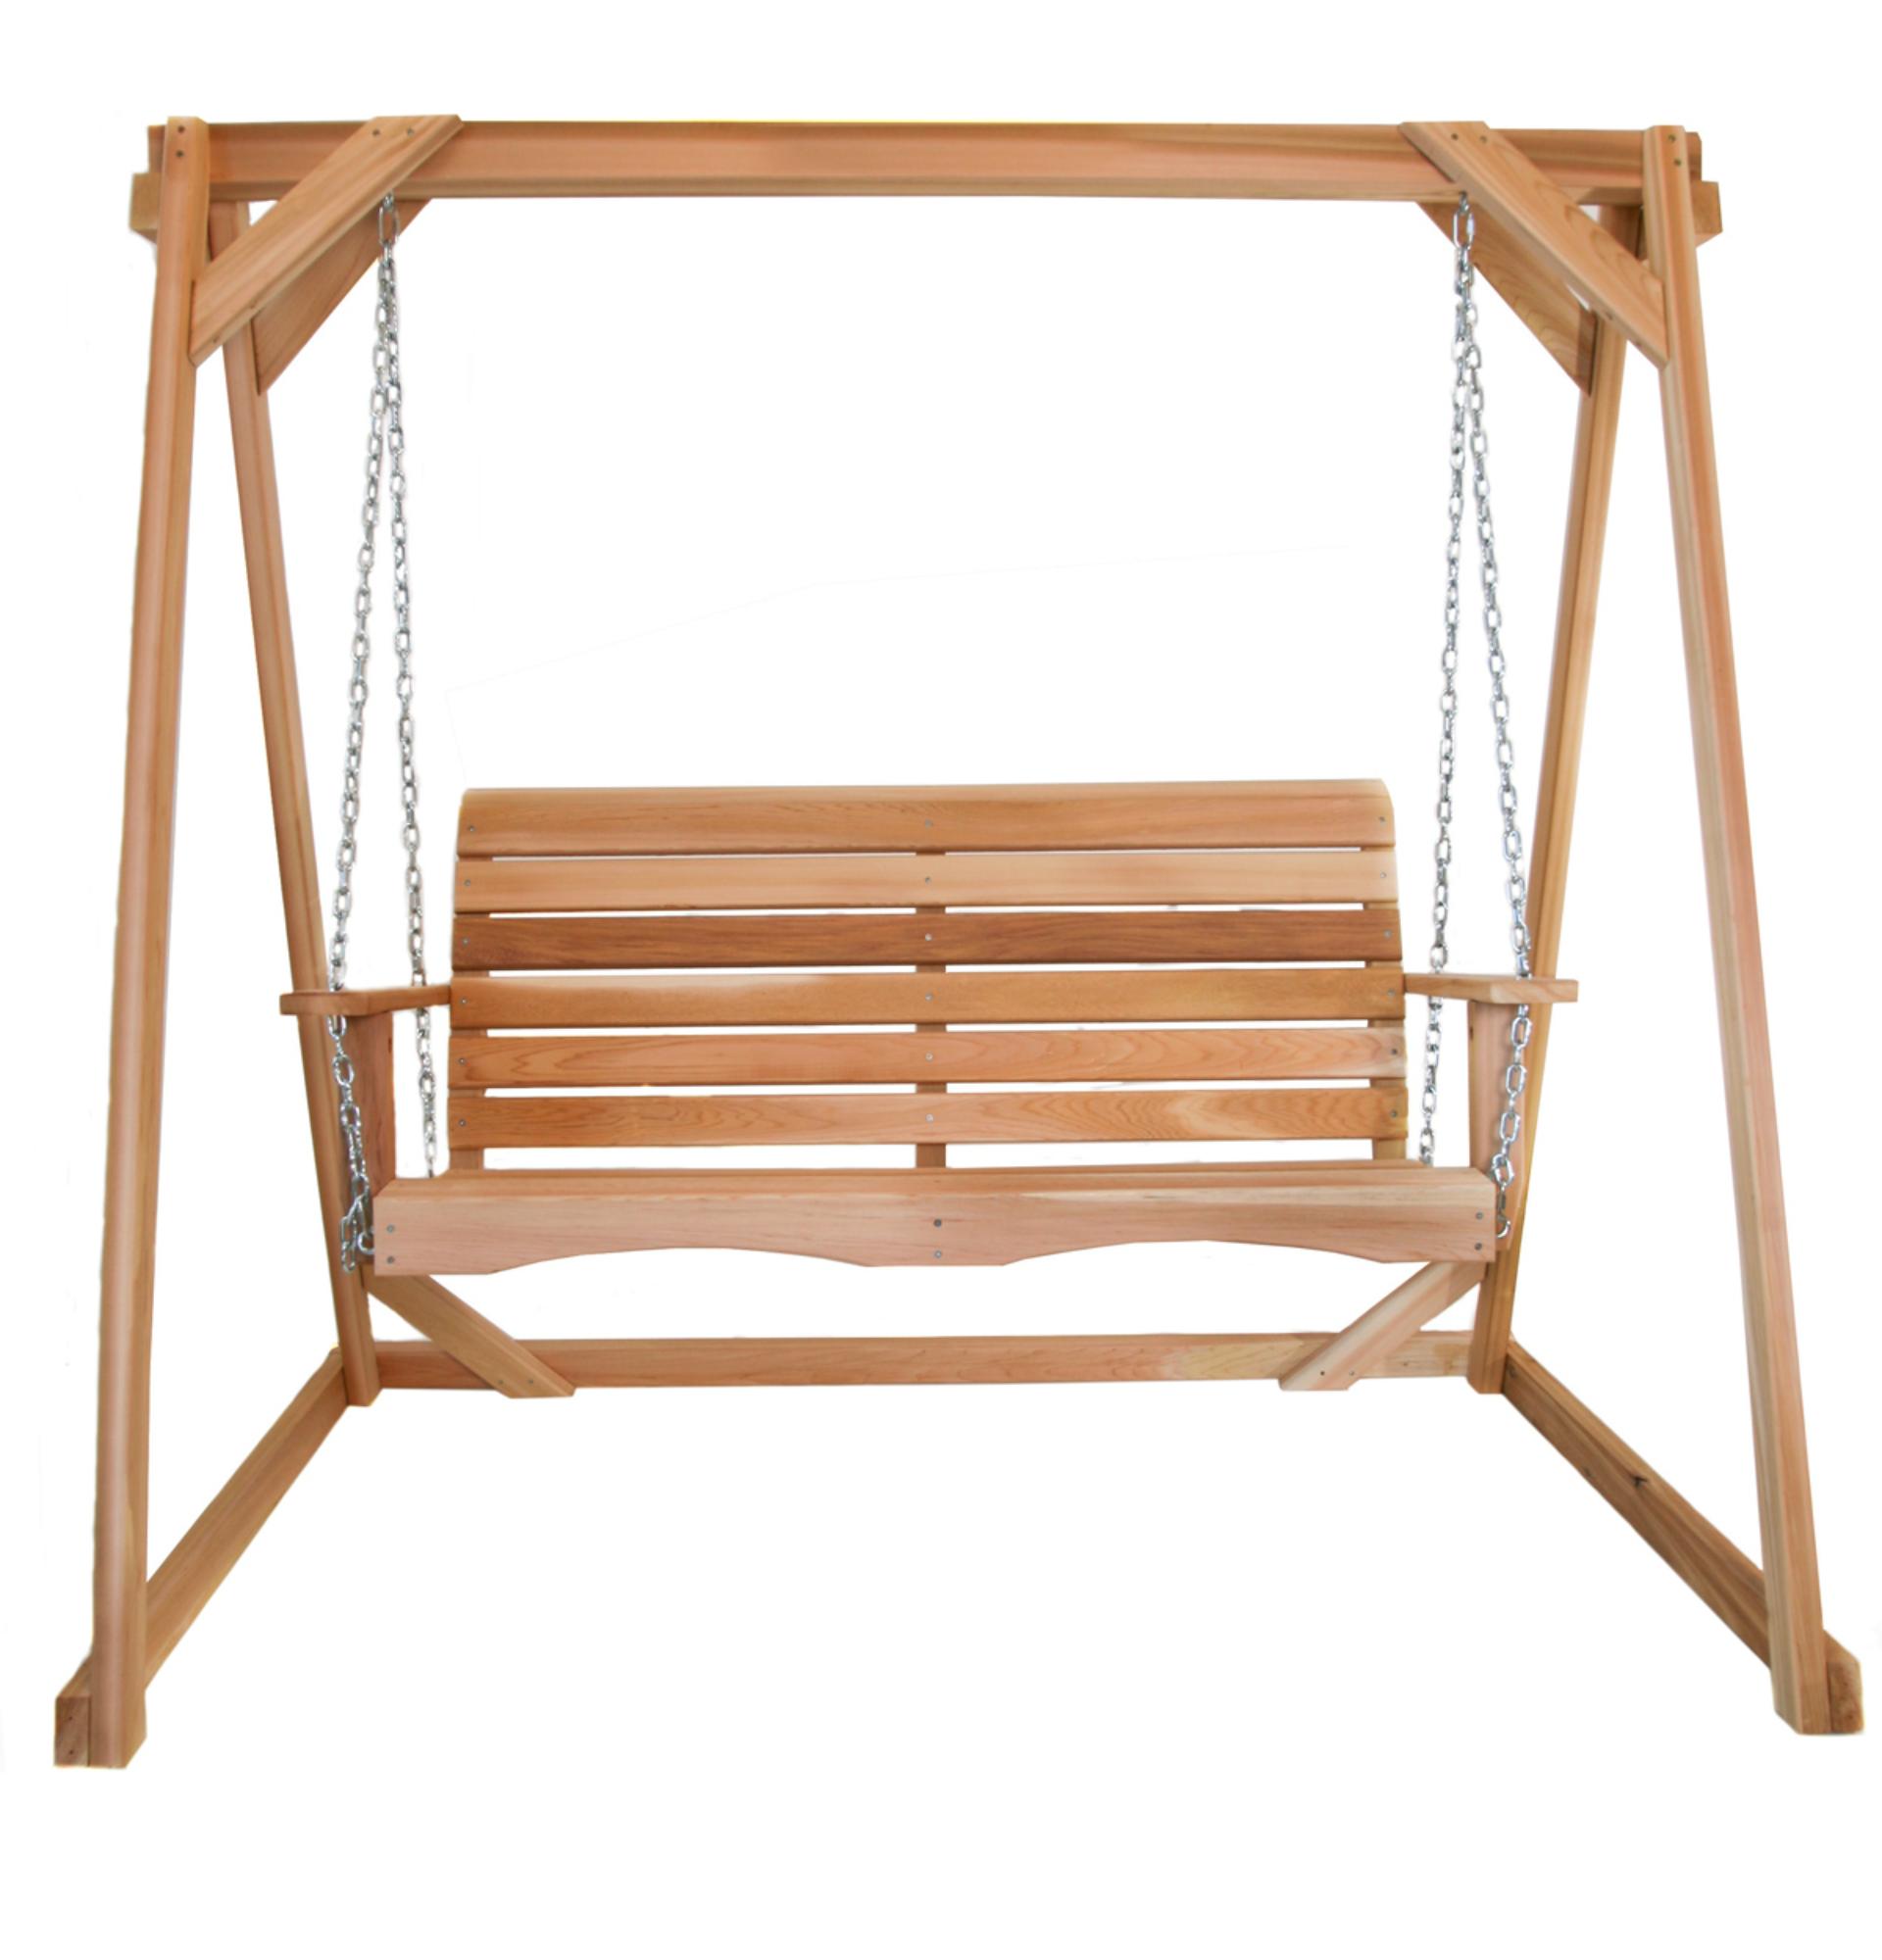 A-Frame Swing Set